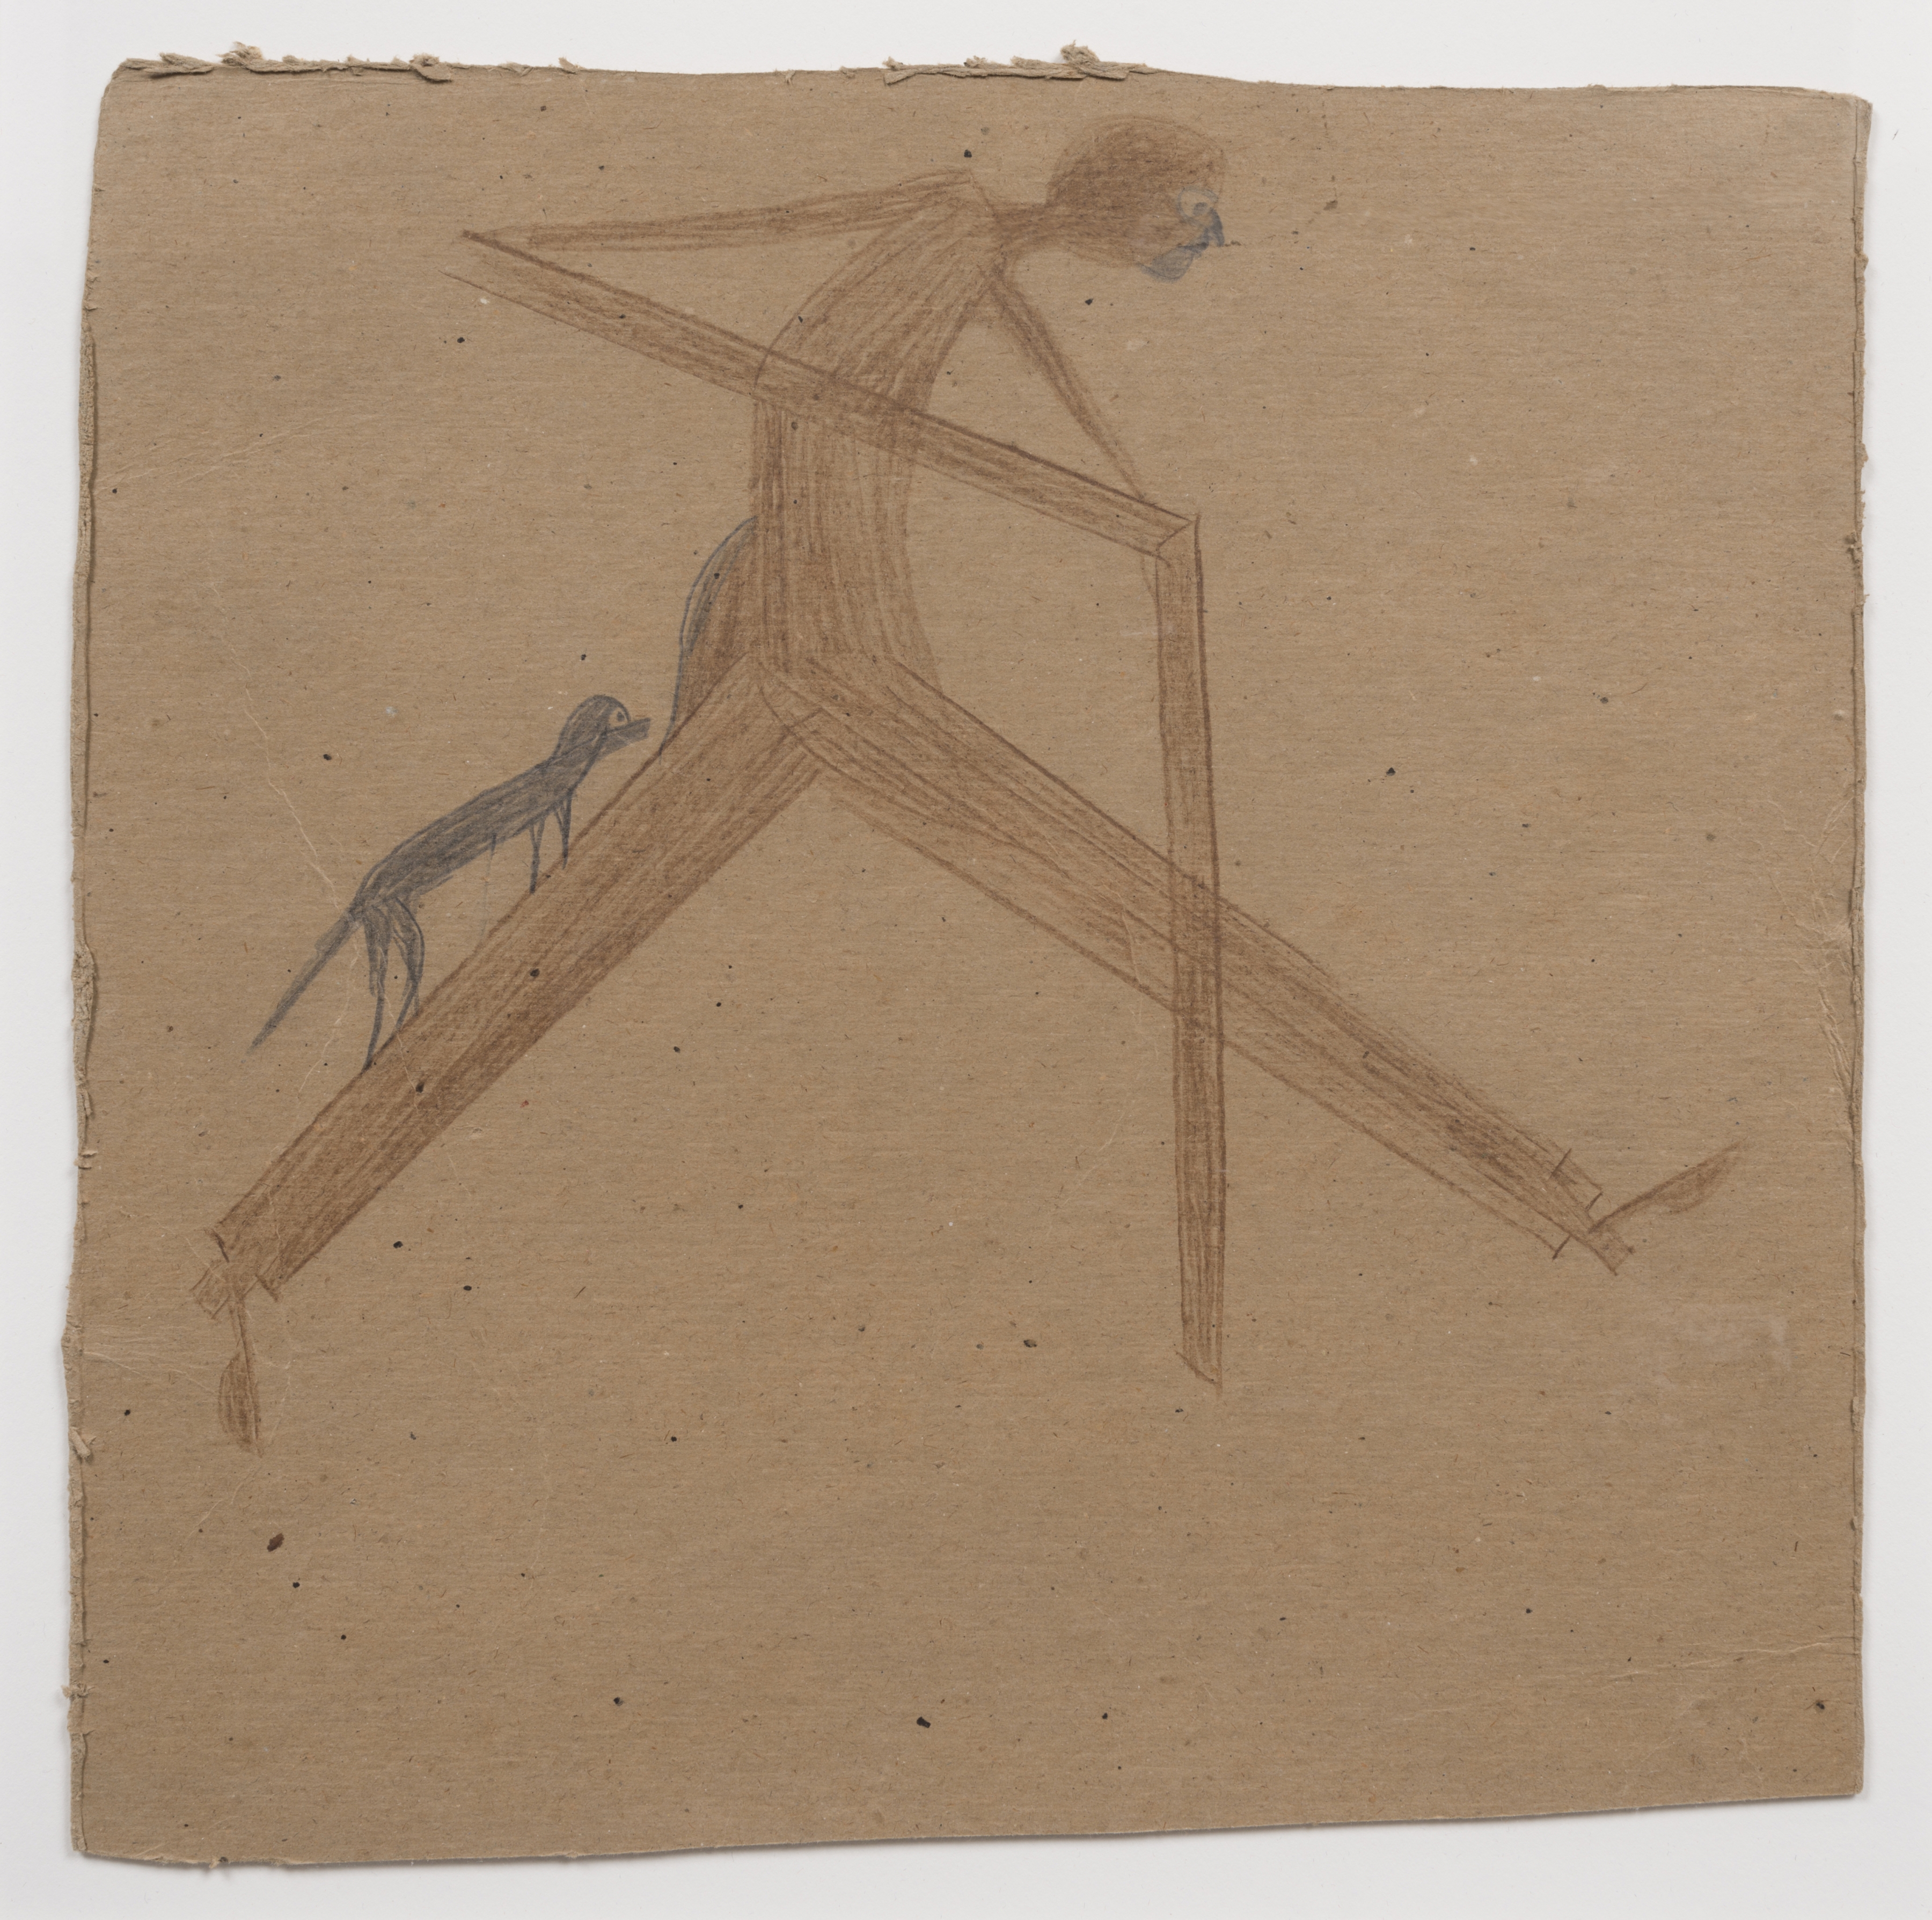 Bill Traylor,&nbsp;Man Walking Dog, 1939&ndash;42;&nbsp;colored pencil on cardboard,&nbsp;12h x 12w in/&nbsp;30.48h x 30.48w cm

Inquire